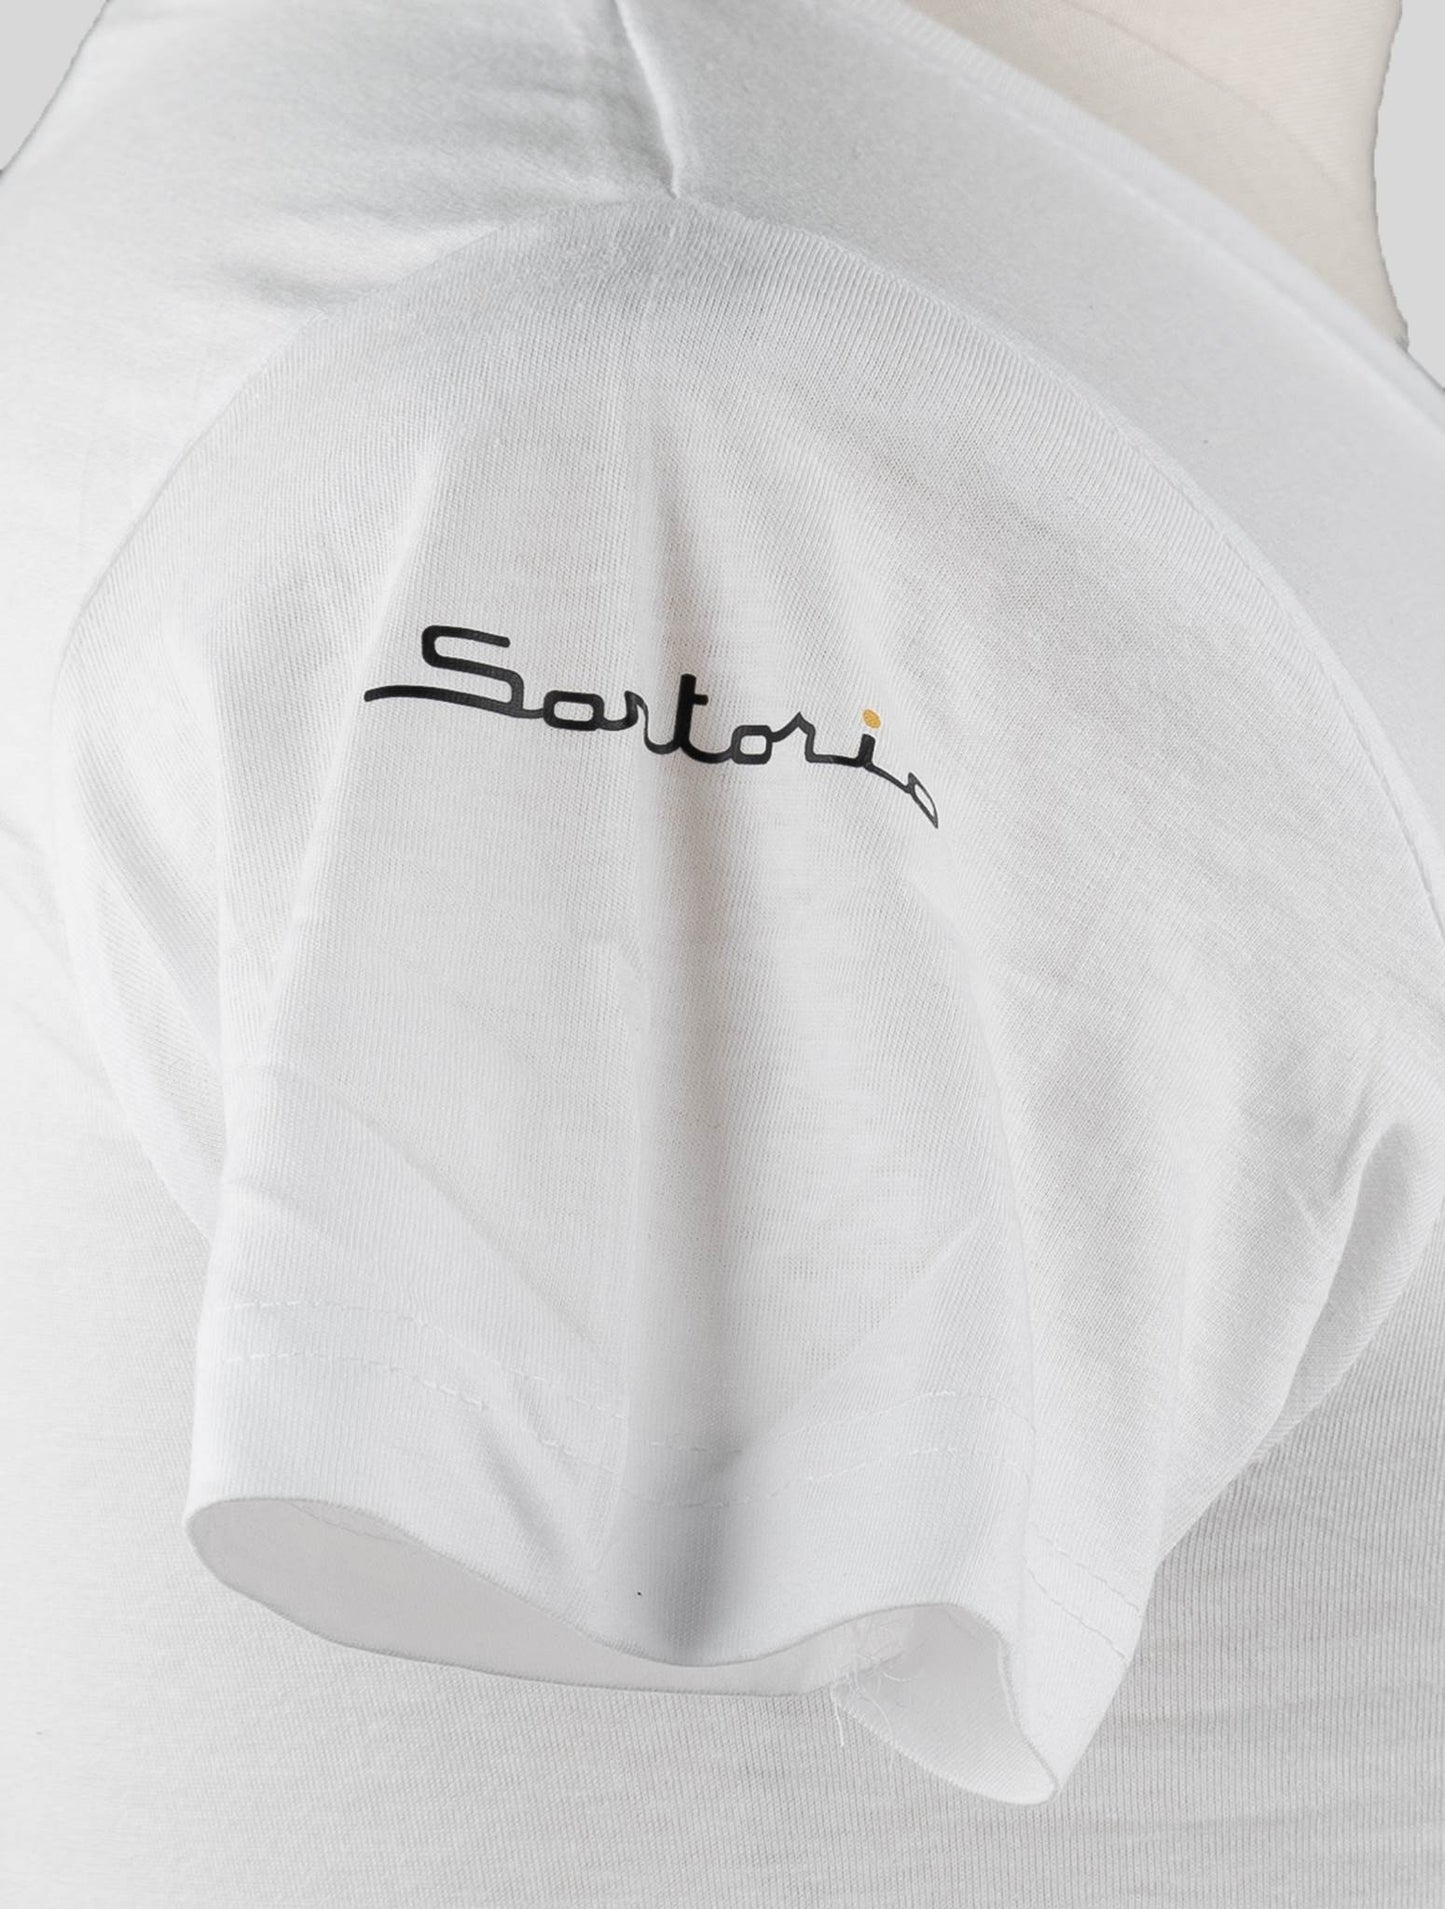 Sartorio NapoliホワイトコットンスペシャルエディションTシャツ